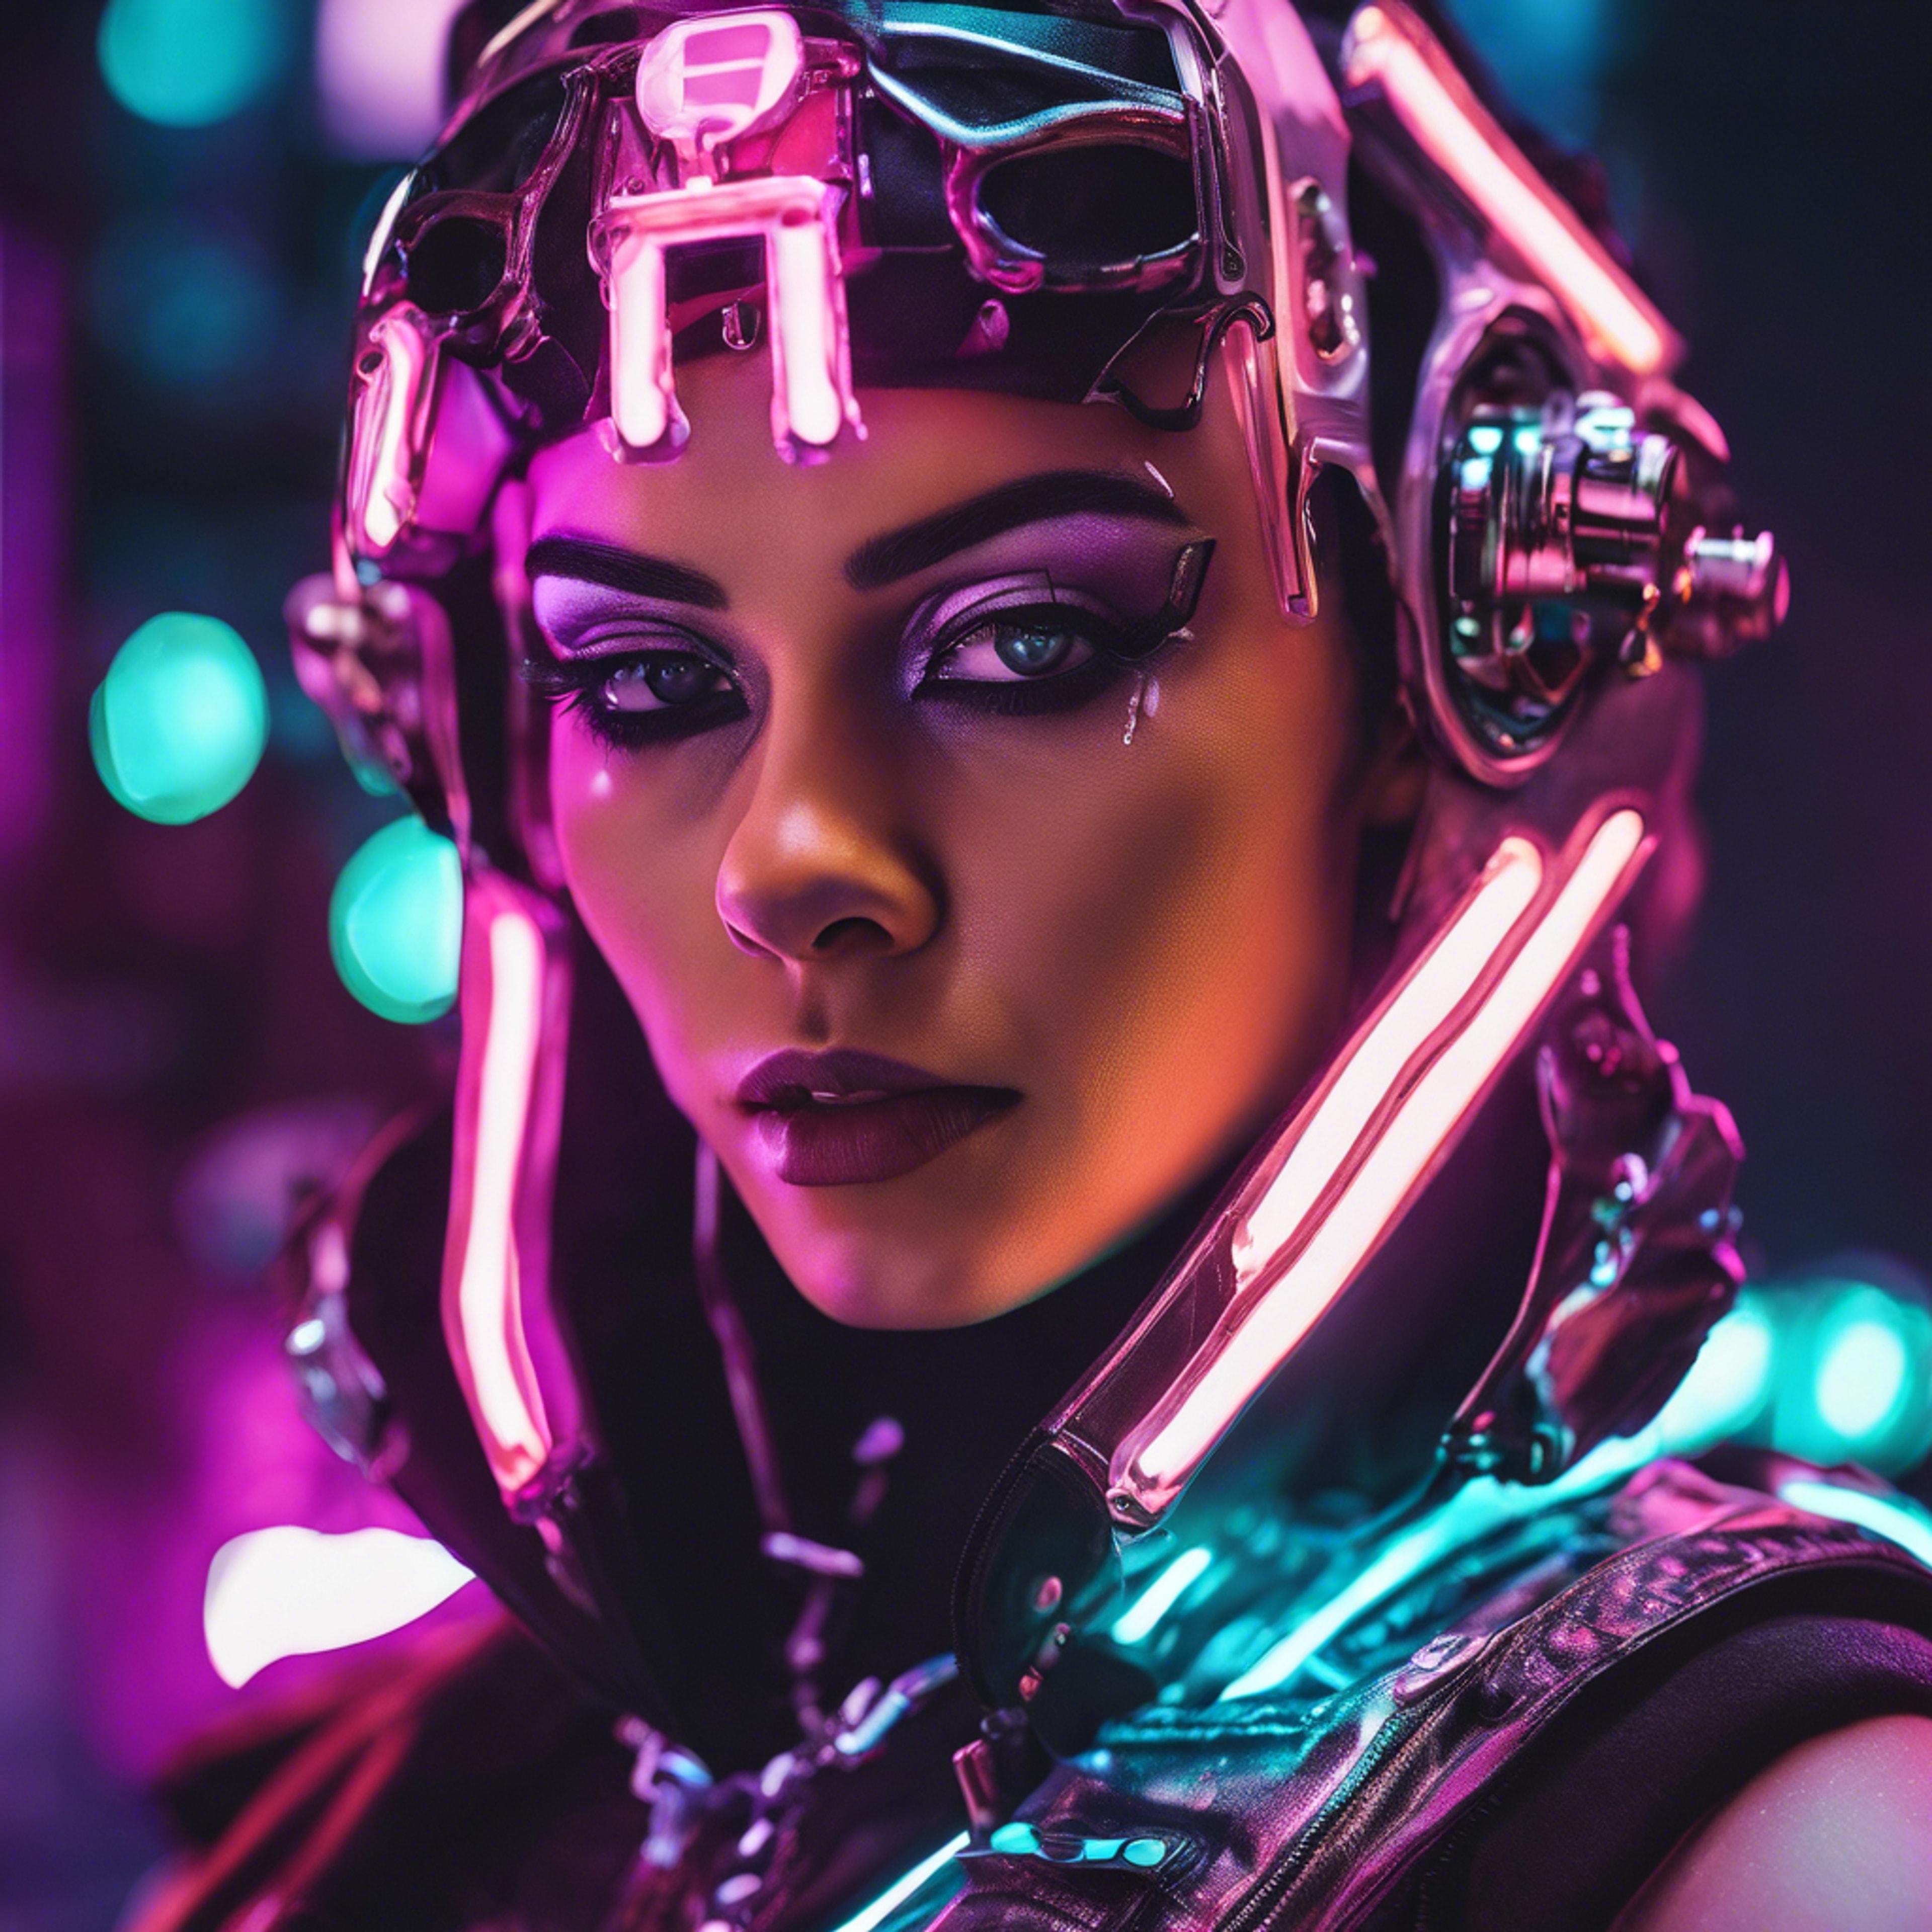 A close-up portrait of a cyberpunk baddie in neon lighting, metal piercings, and sci-fi-inspired makeup. Wallpaper[9ac0123c92044077bebc]